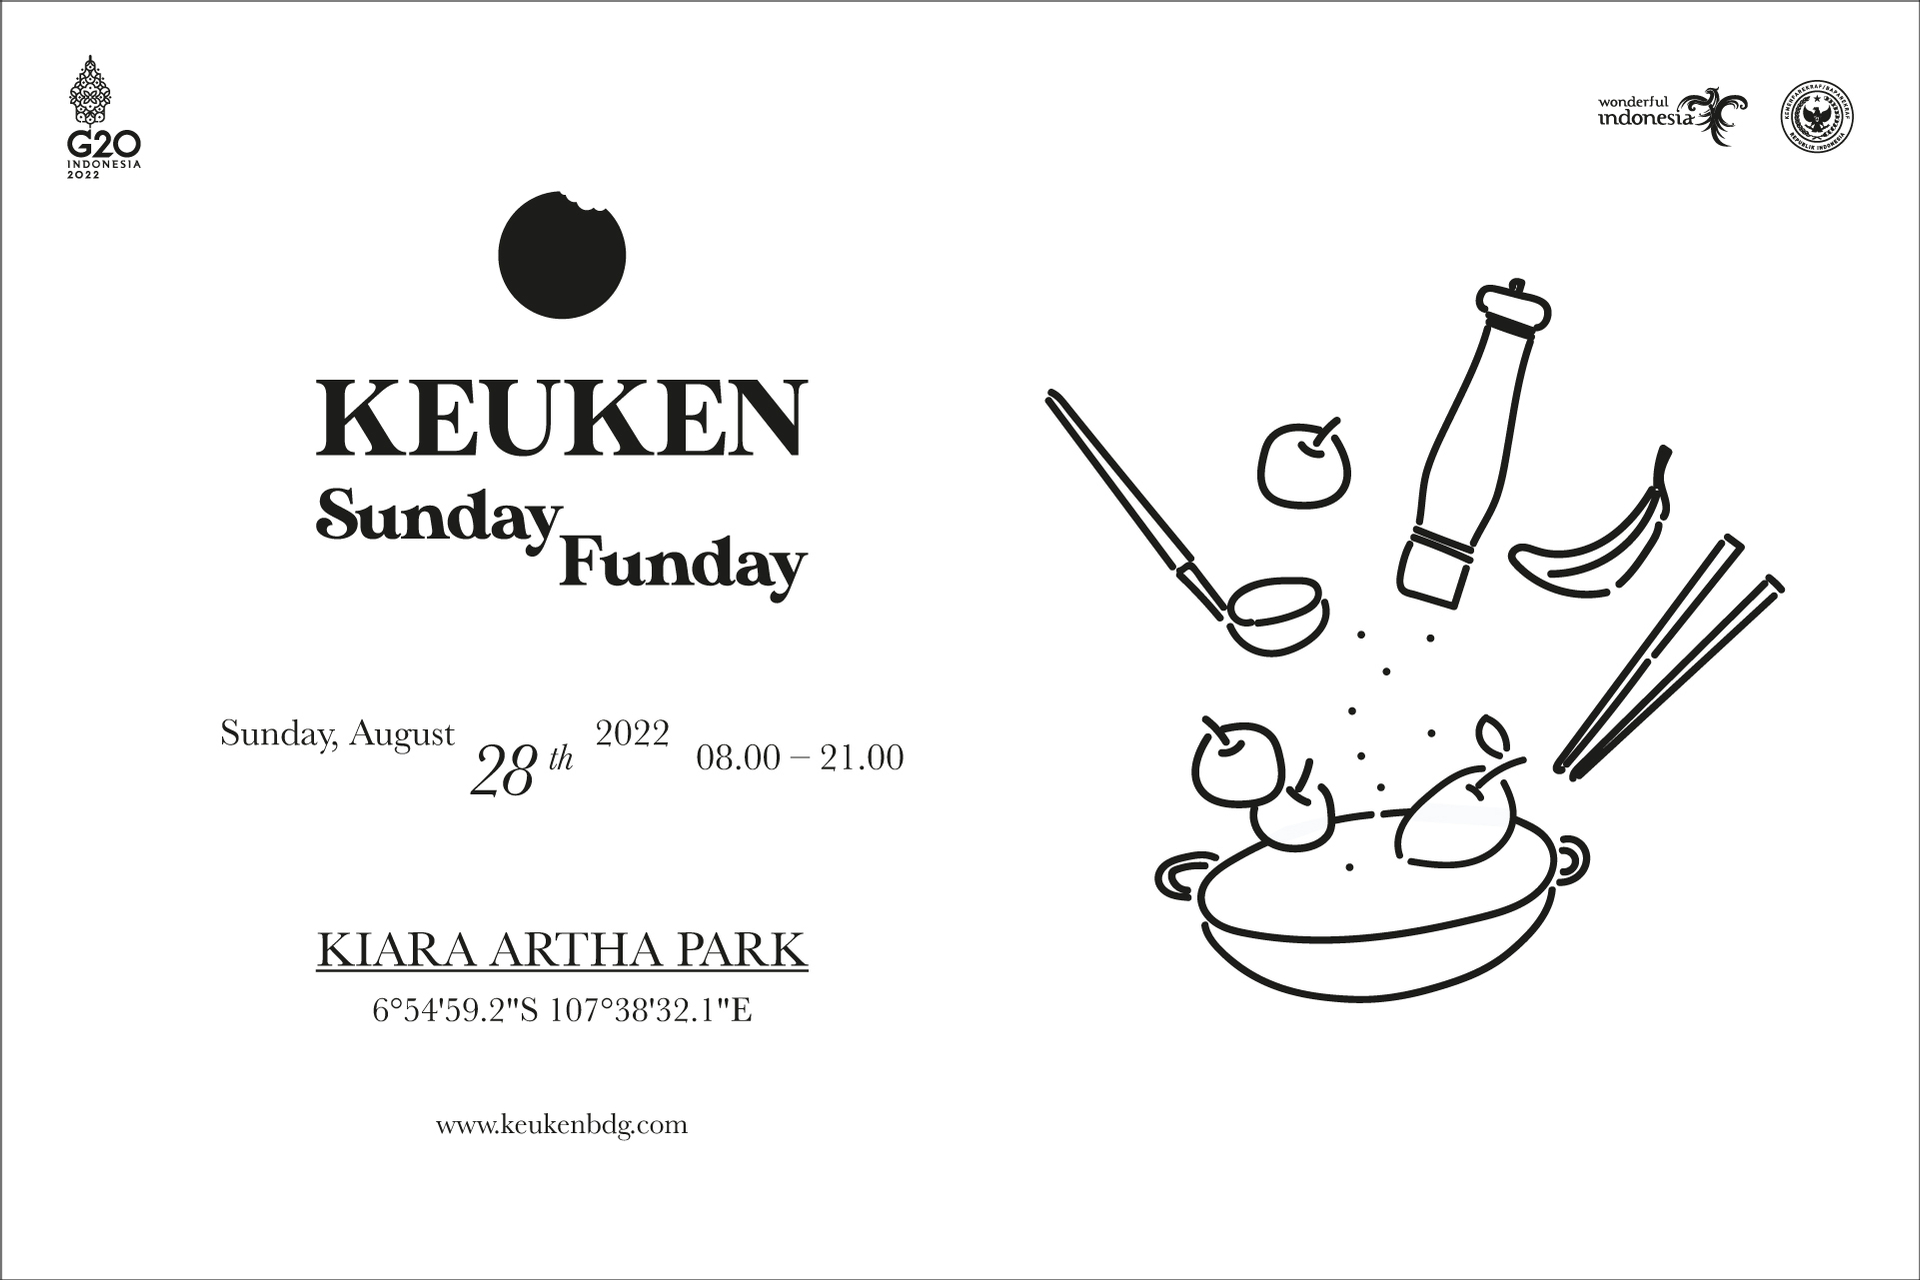 KEUKEN - Sunday Funday 2022 - tiket.com